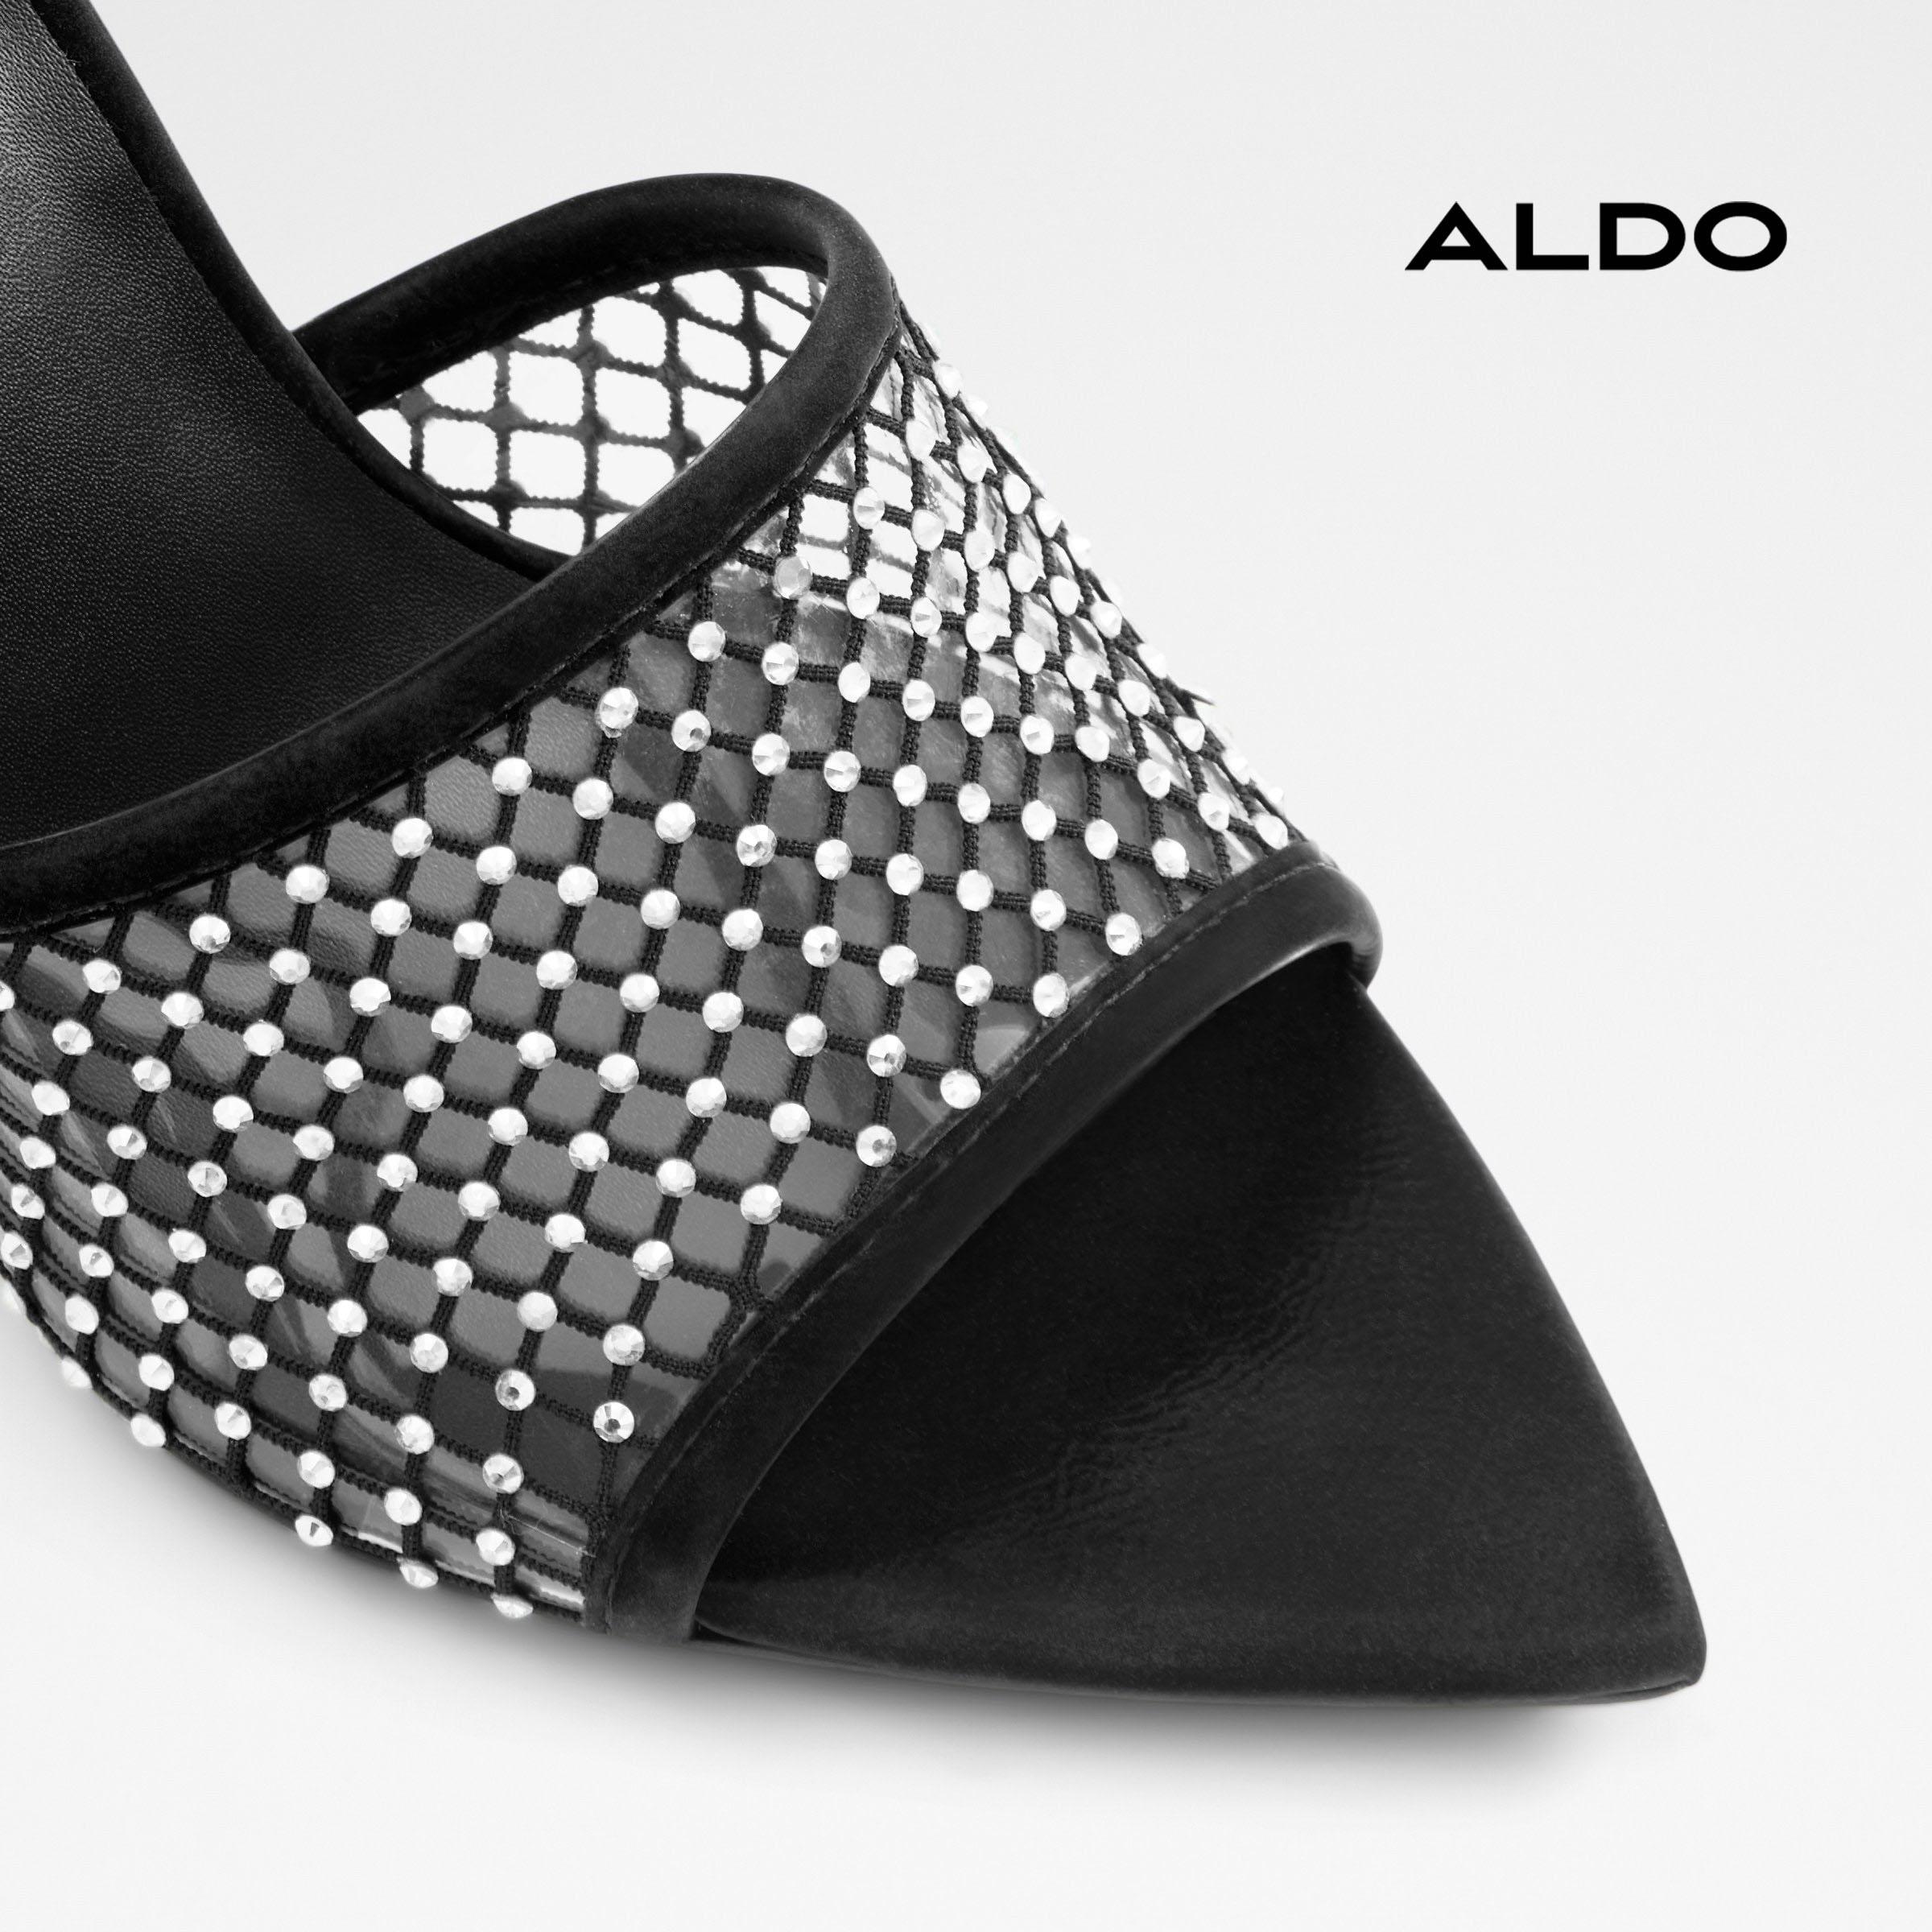 Sandal cao gót nữ Aldo FLURI